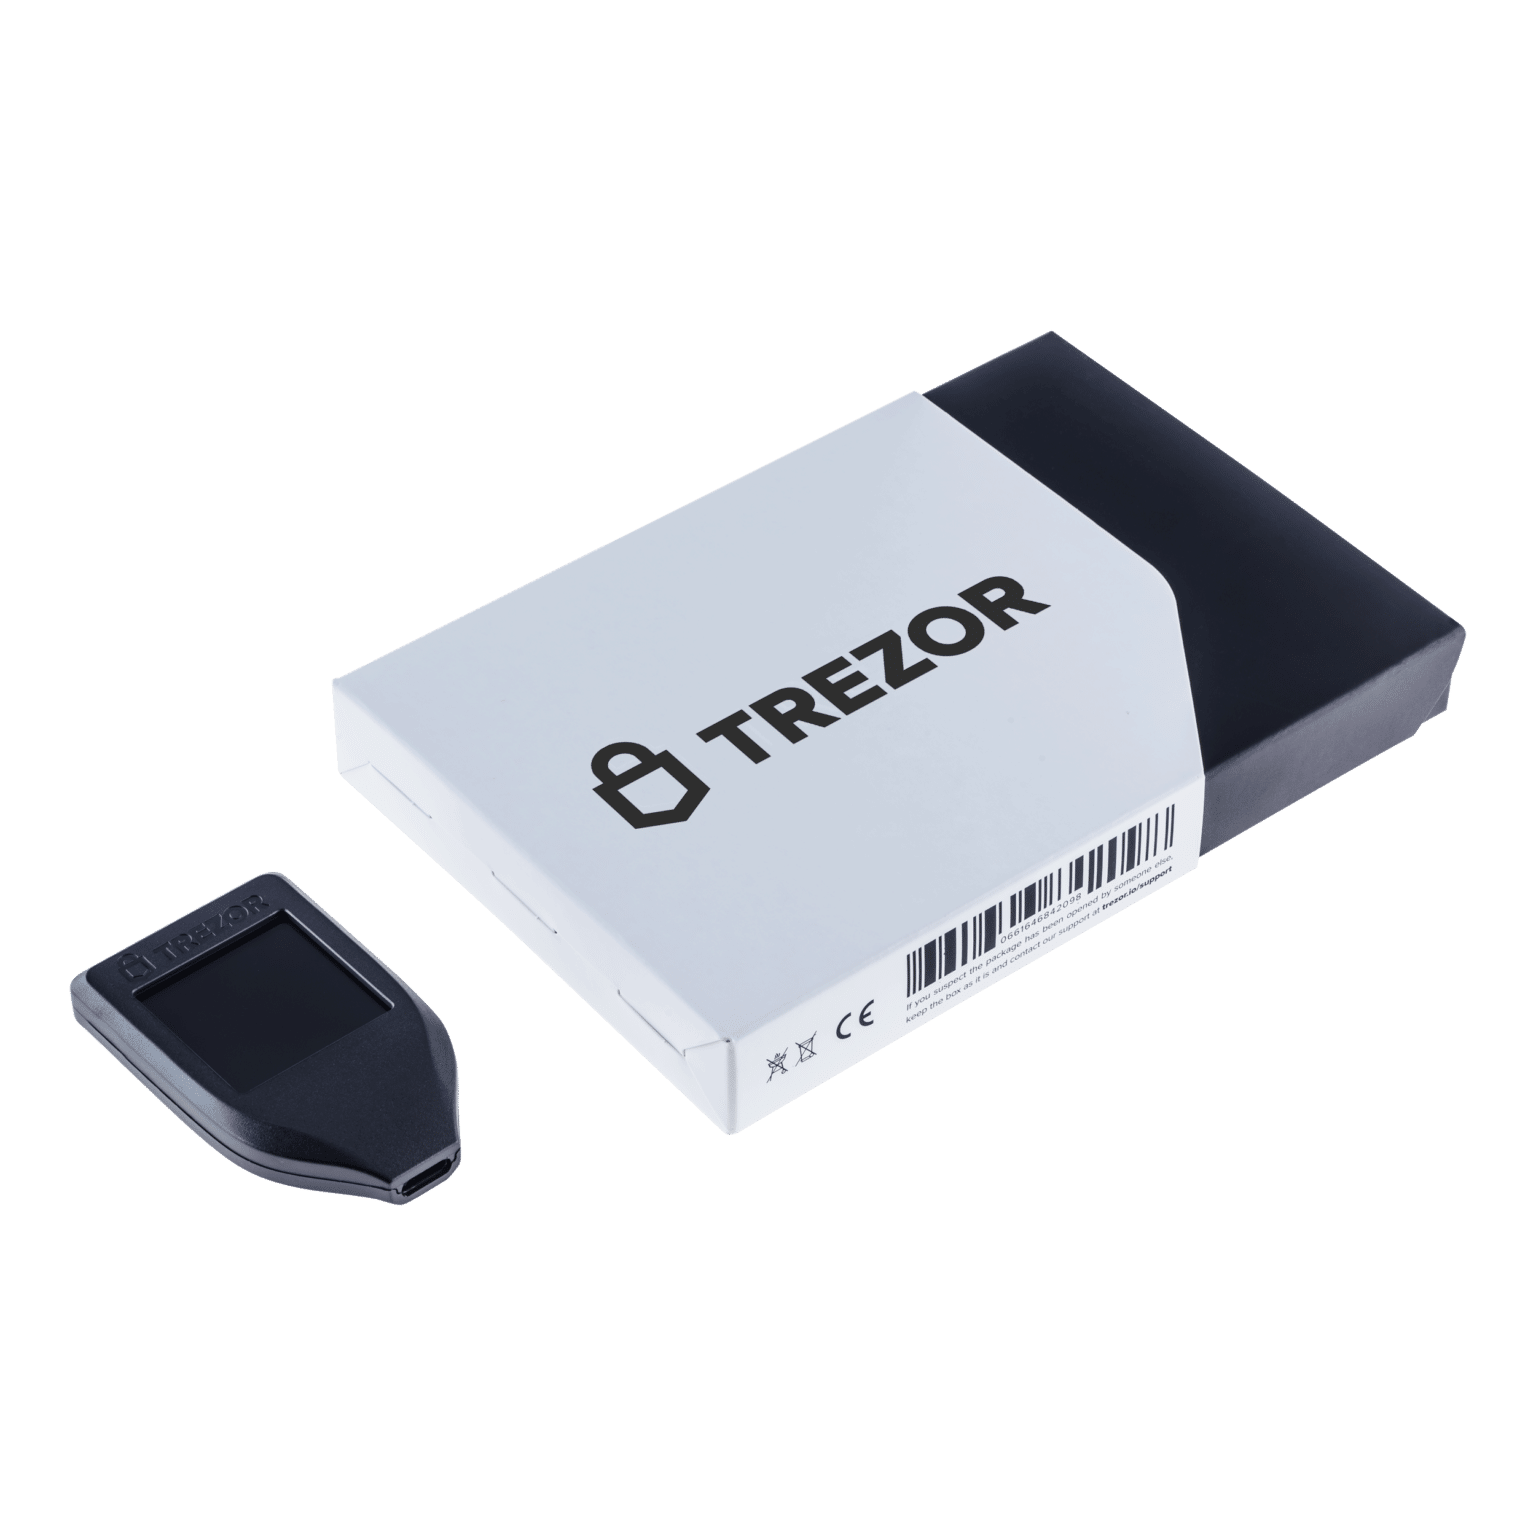 Trezor Model T- Next Generation Crypto Hardware Wallet ...